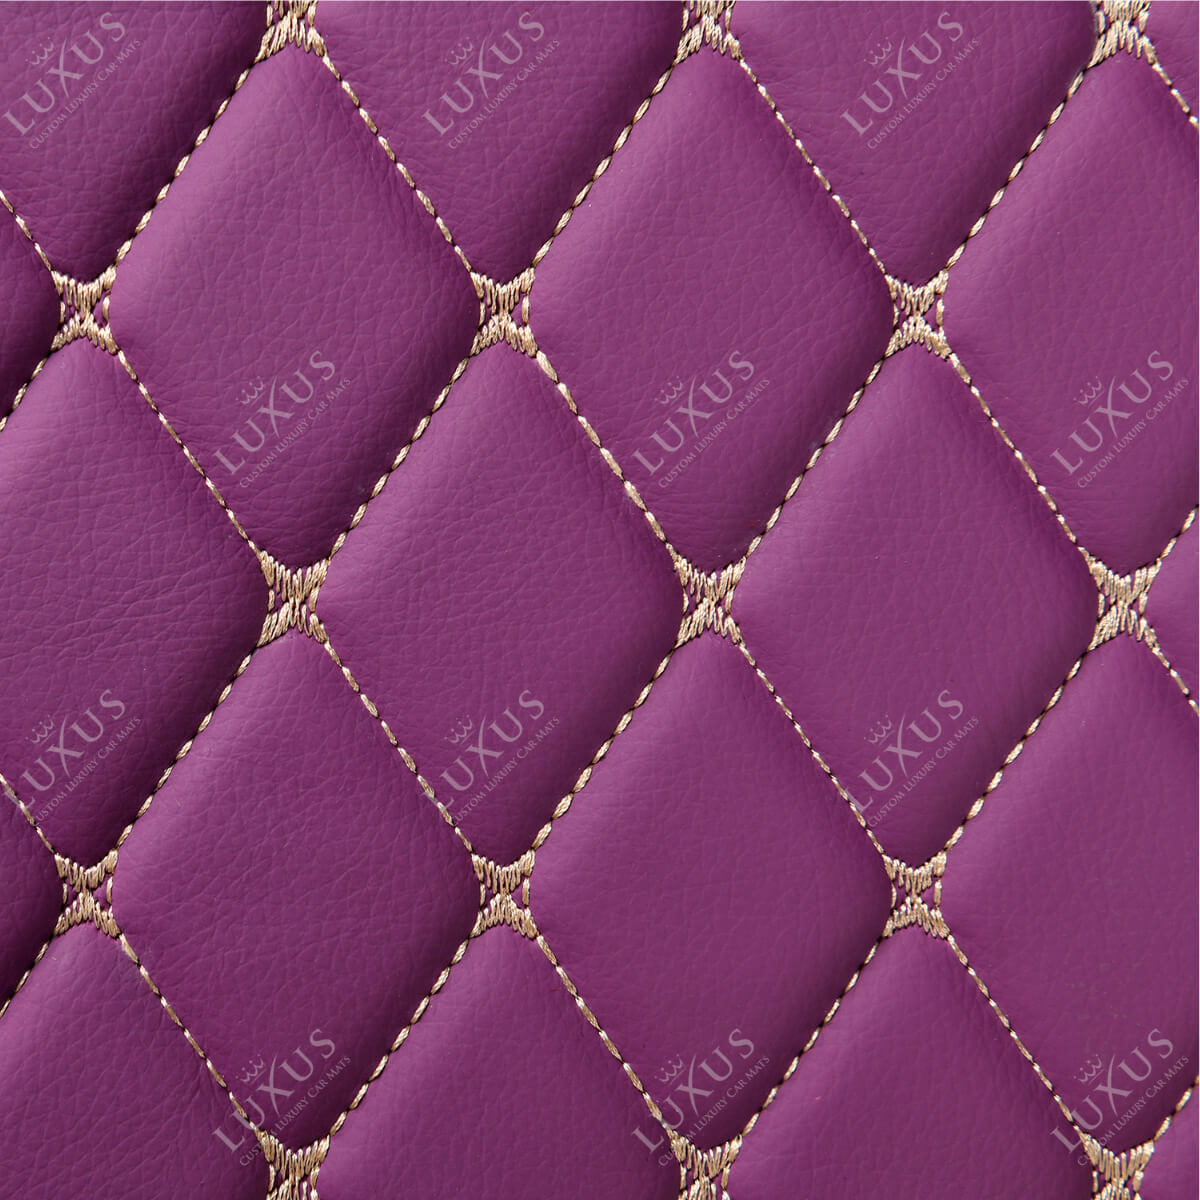 Lavender Purple Diamond Luxury Boot/Trunk Mat